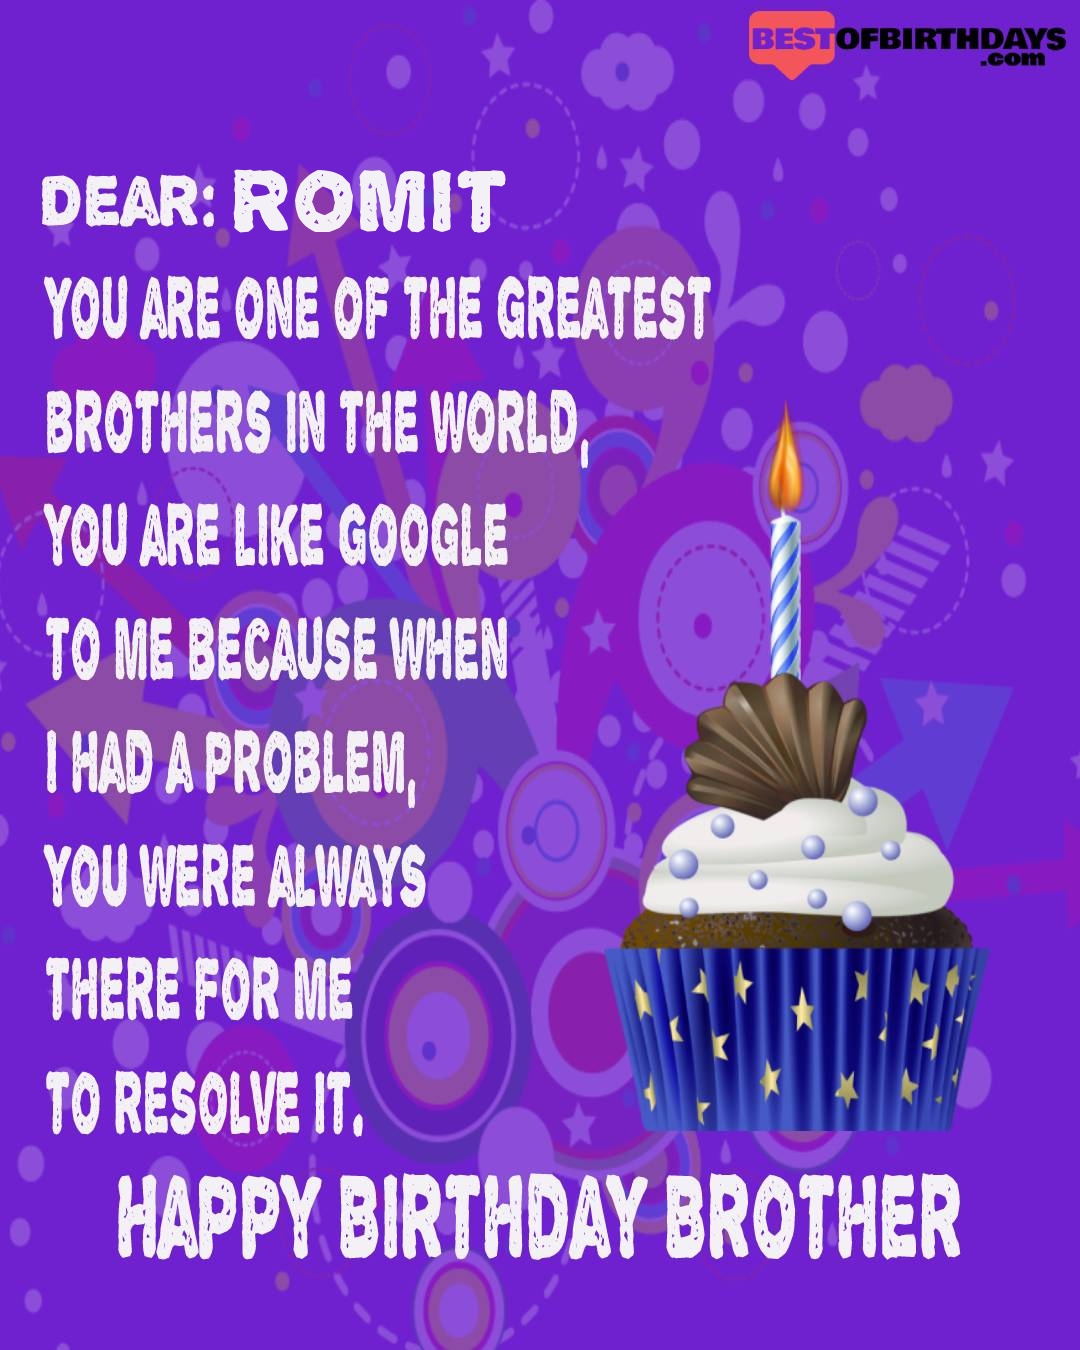 Happy birthday romit bhai brother bro